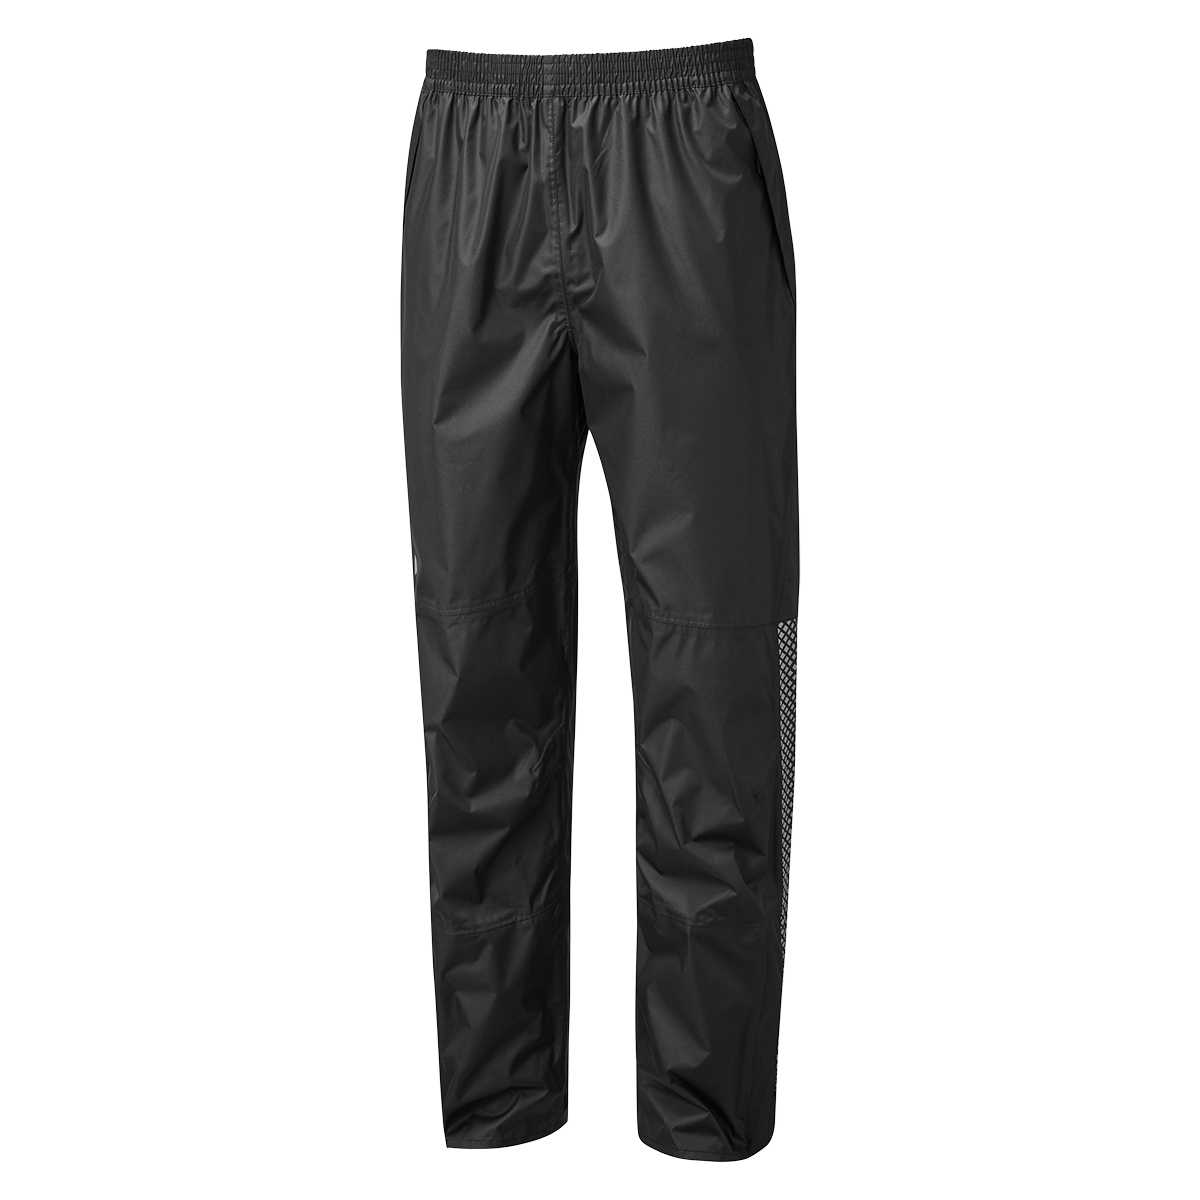 Altura Sur-Pantalon Nightvision - Cycling trousers - Men's